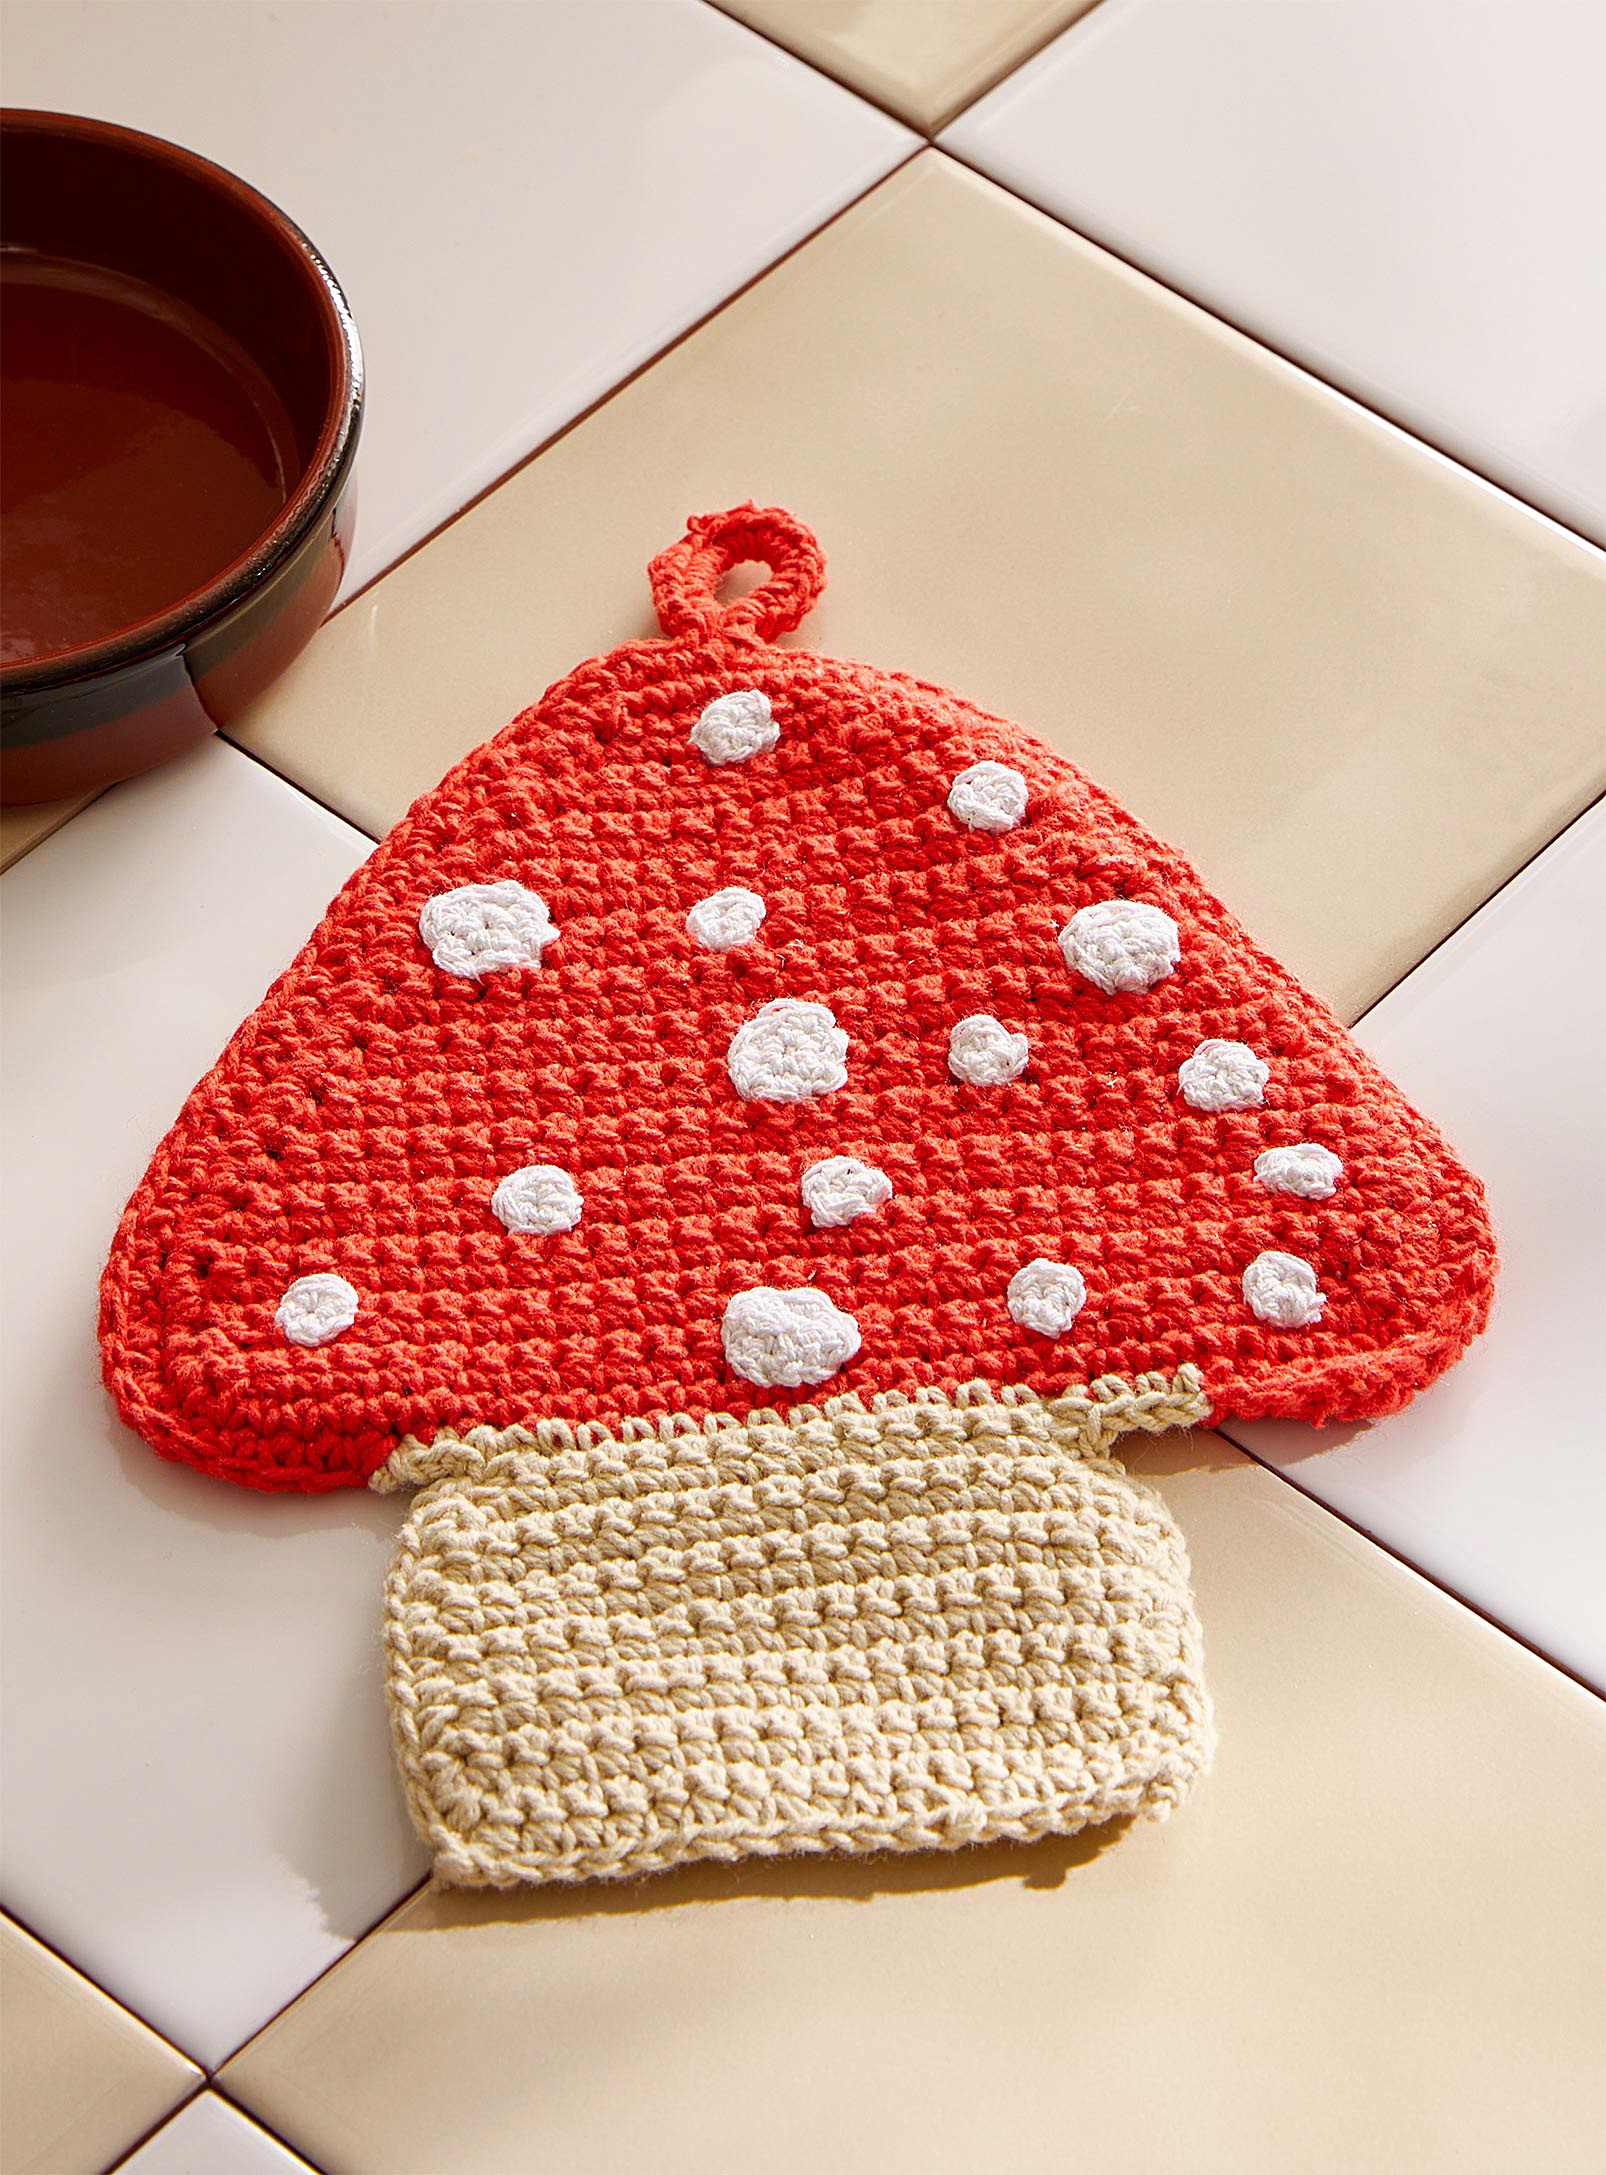 Danica - Mushroom crocheted trivet 17 x 20 cm